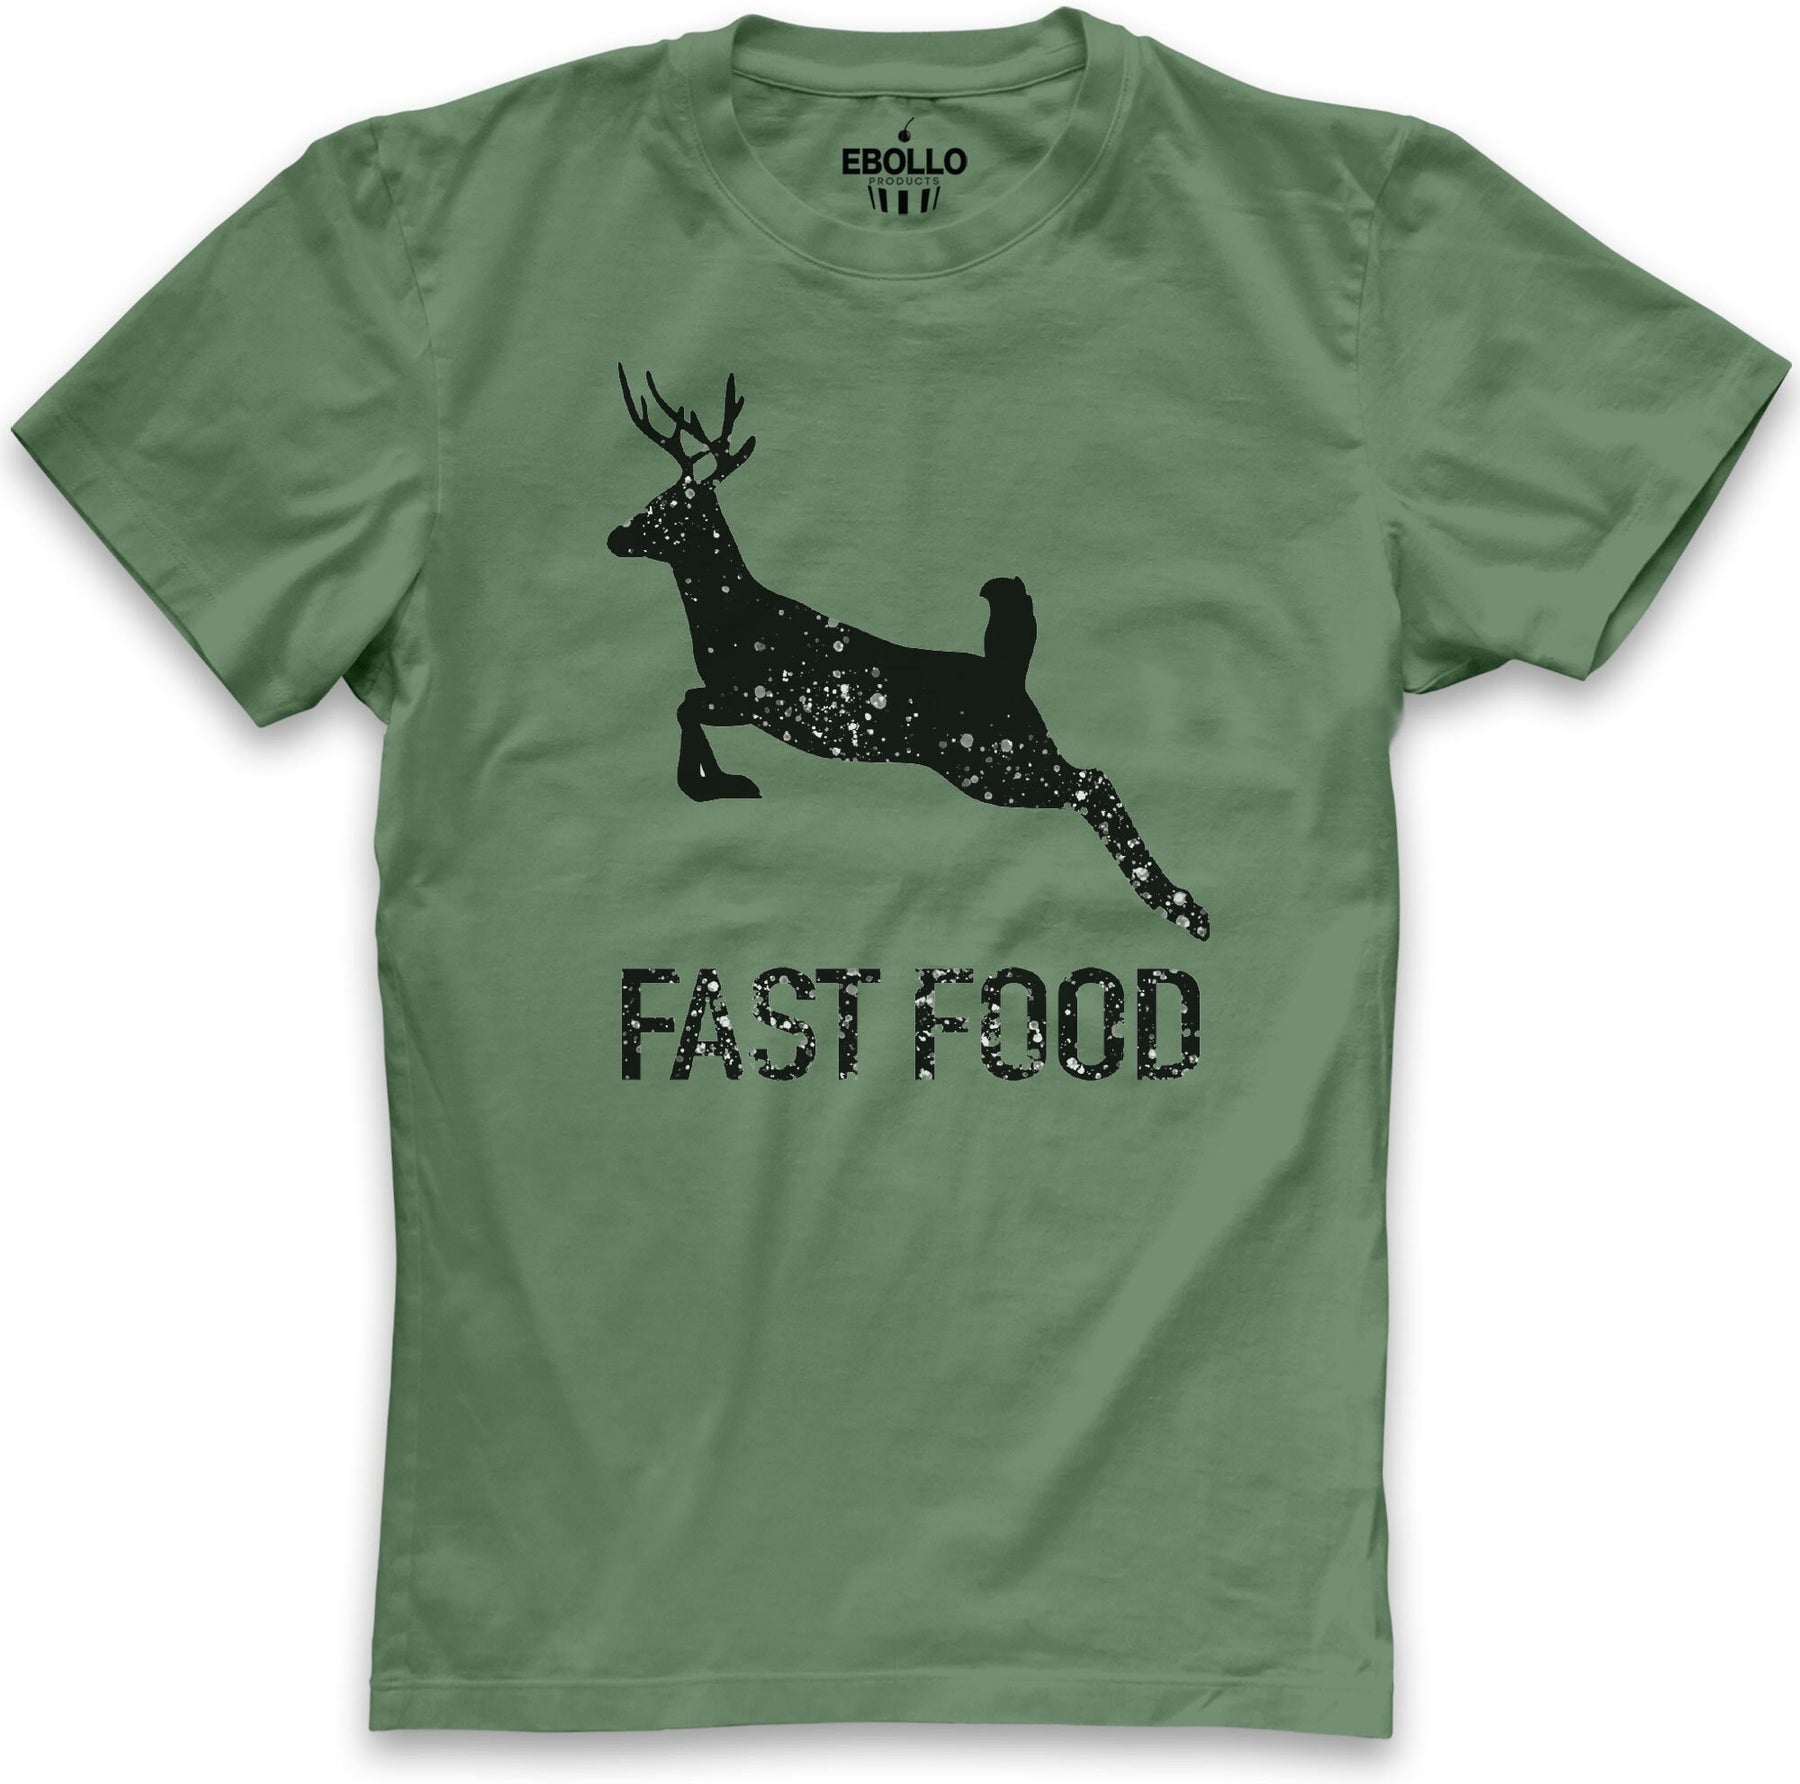 Funny Hunting T Shirt, Fast Food Deer, Hunters Shirt - Fathers Day Gift -  Deer Running Fast Tshirt - Grandpa Tee - Gift for Husband